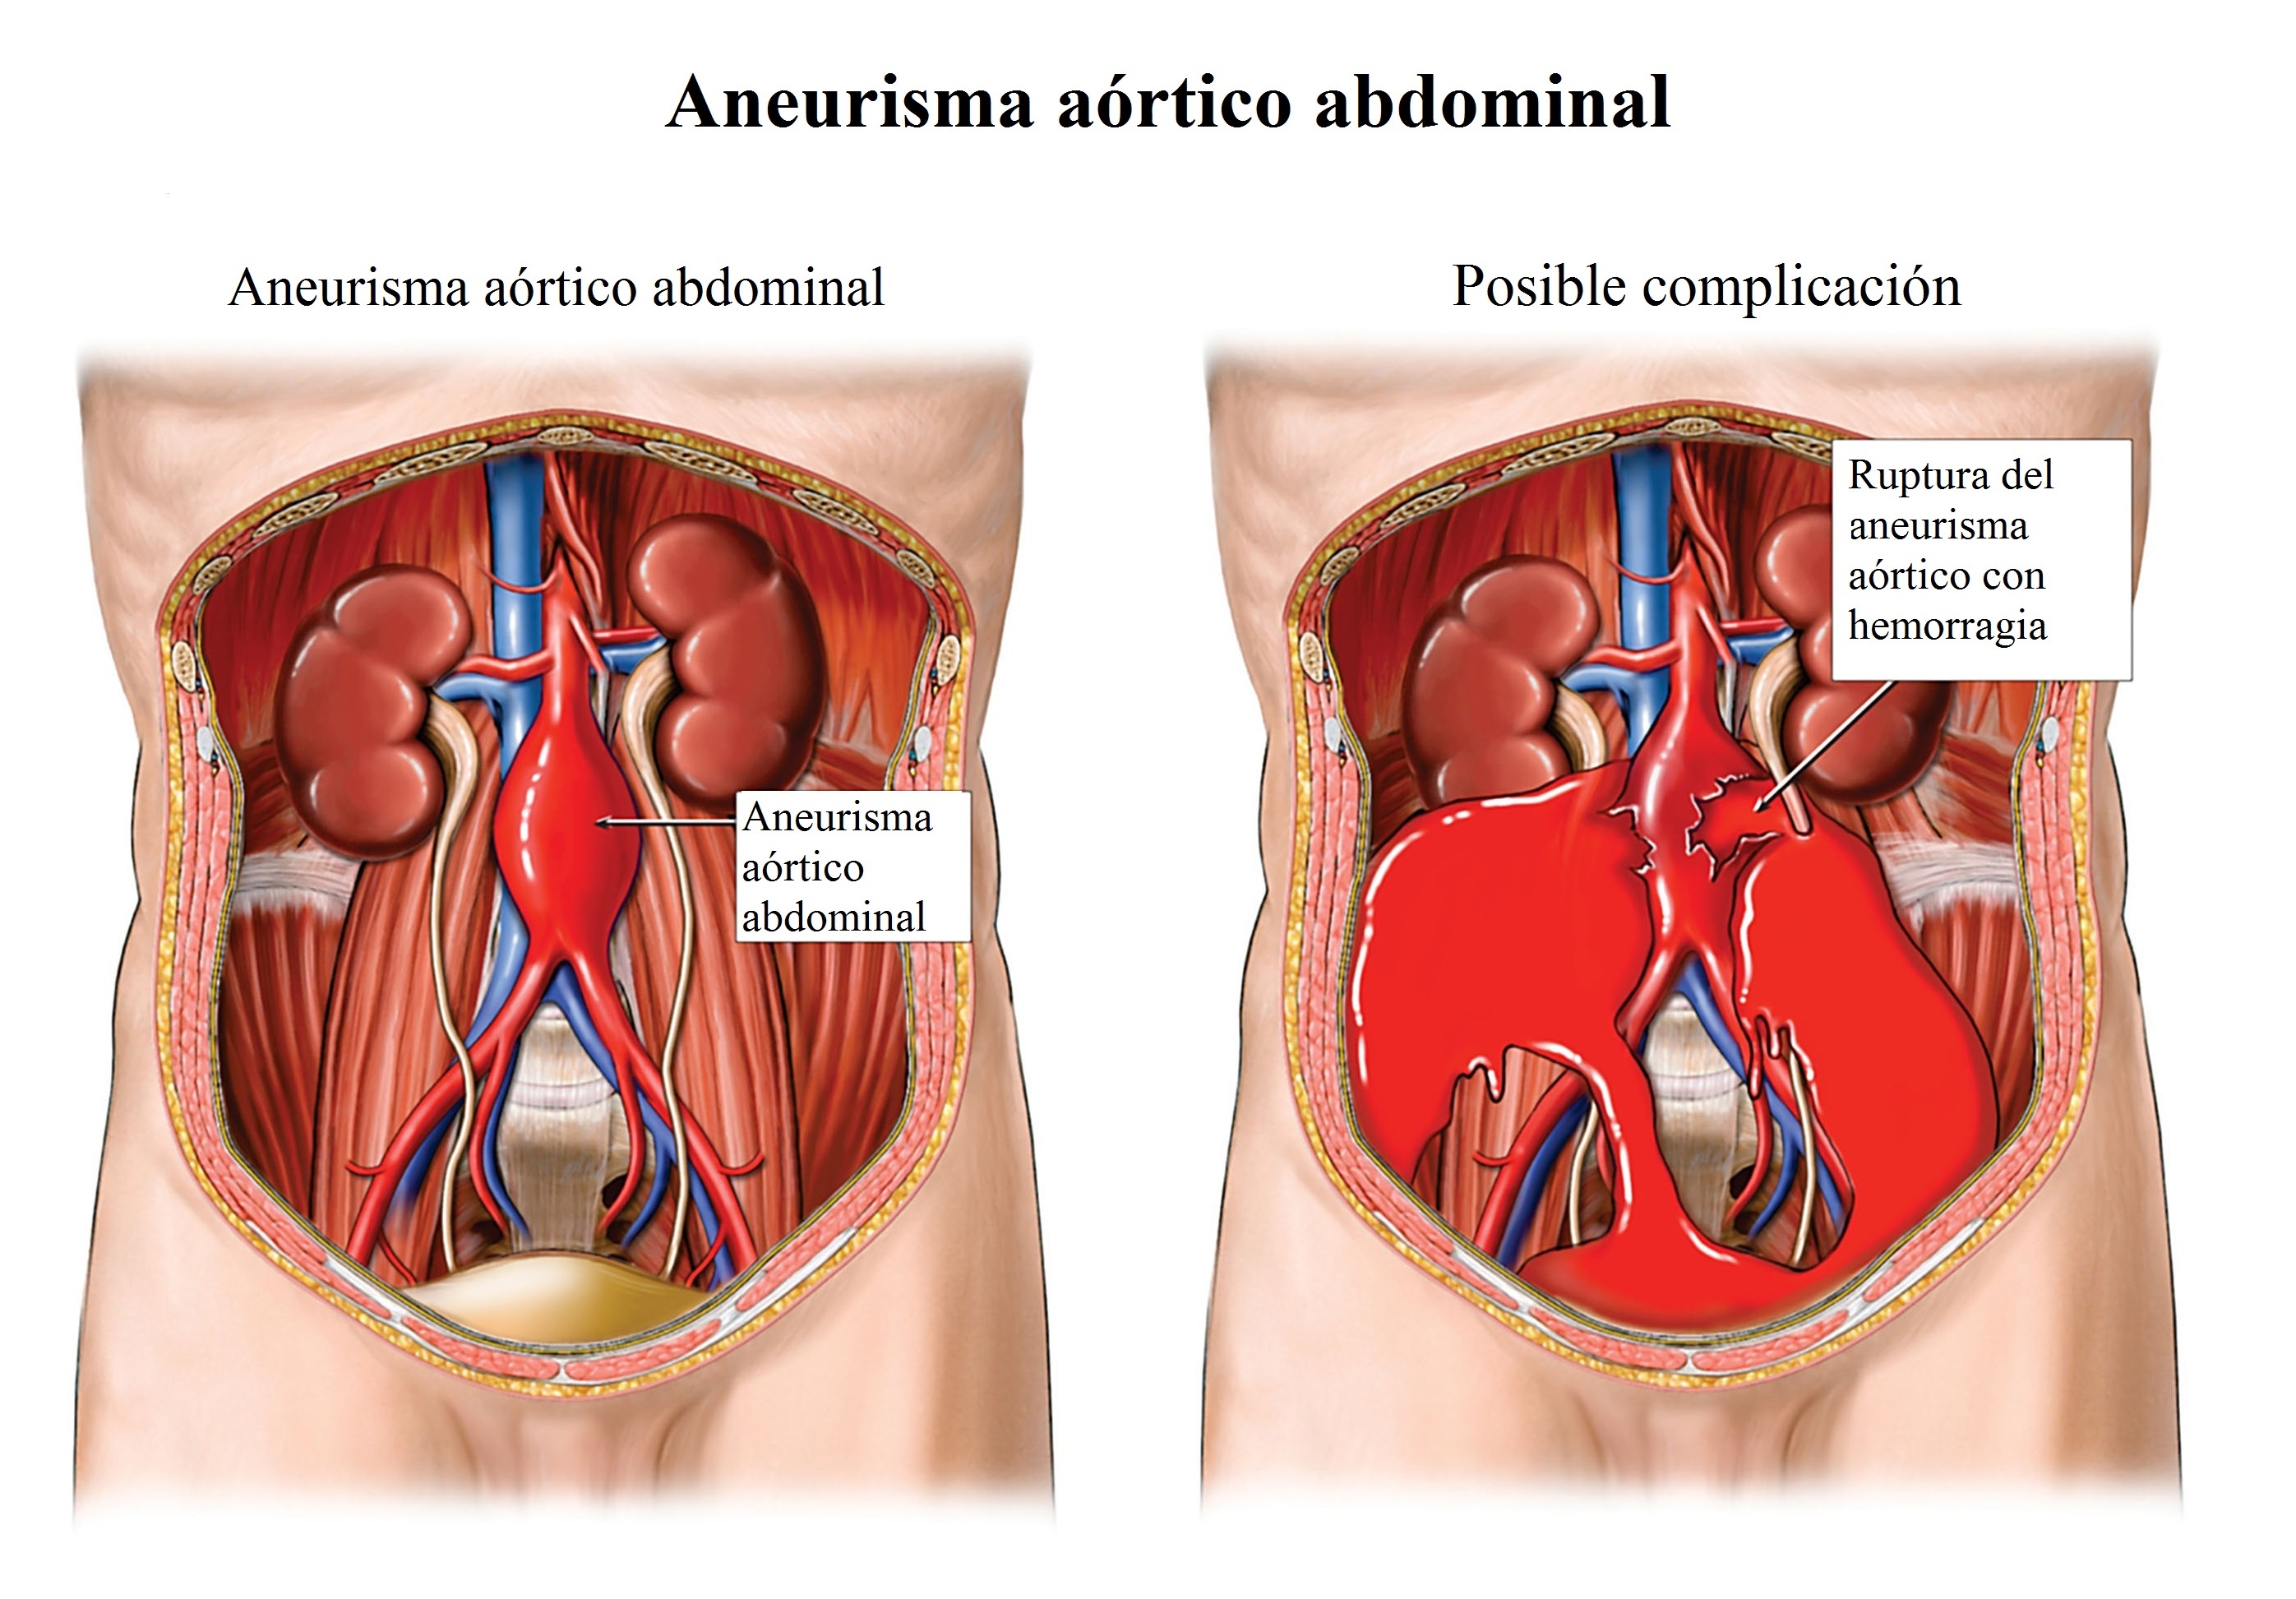 Ruptura del aneurisma, aorta, abdominal